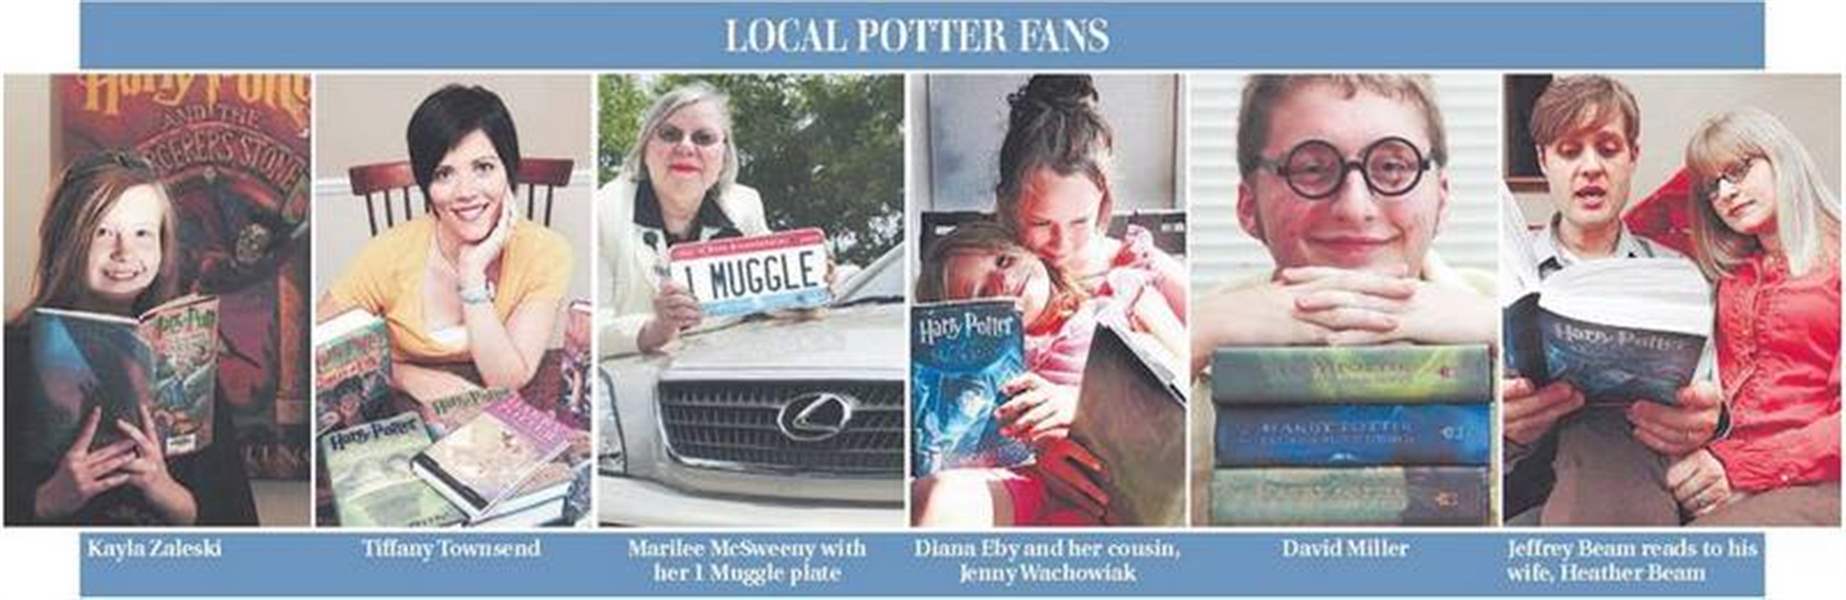 Potter-has-cast-a-spell-on-Toledo-area-fans-2